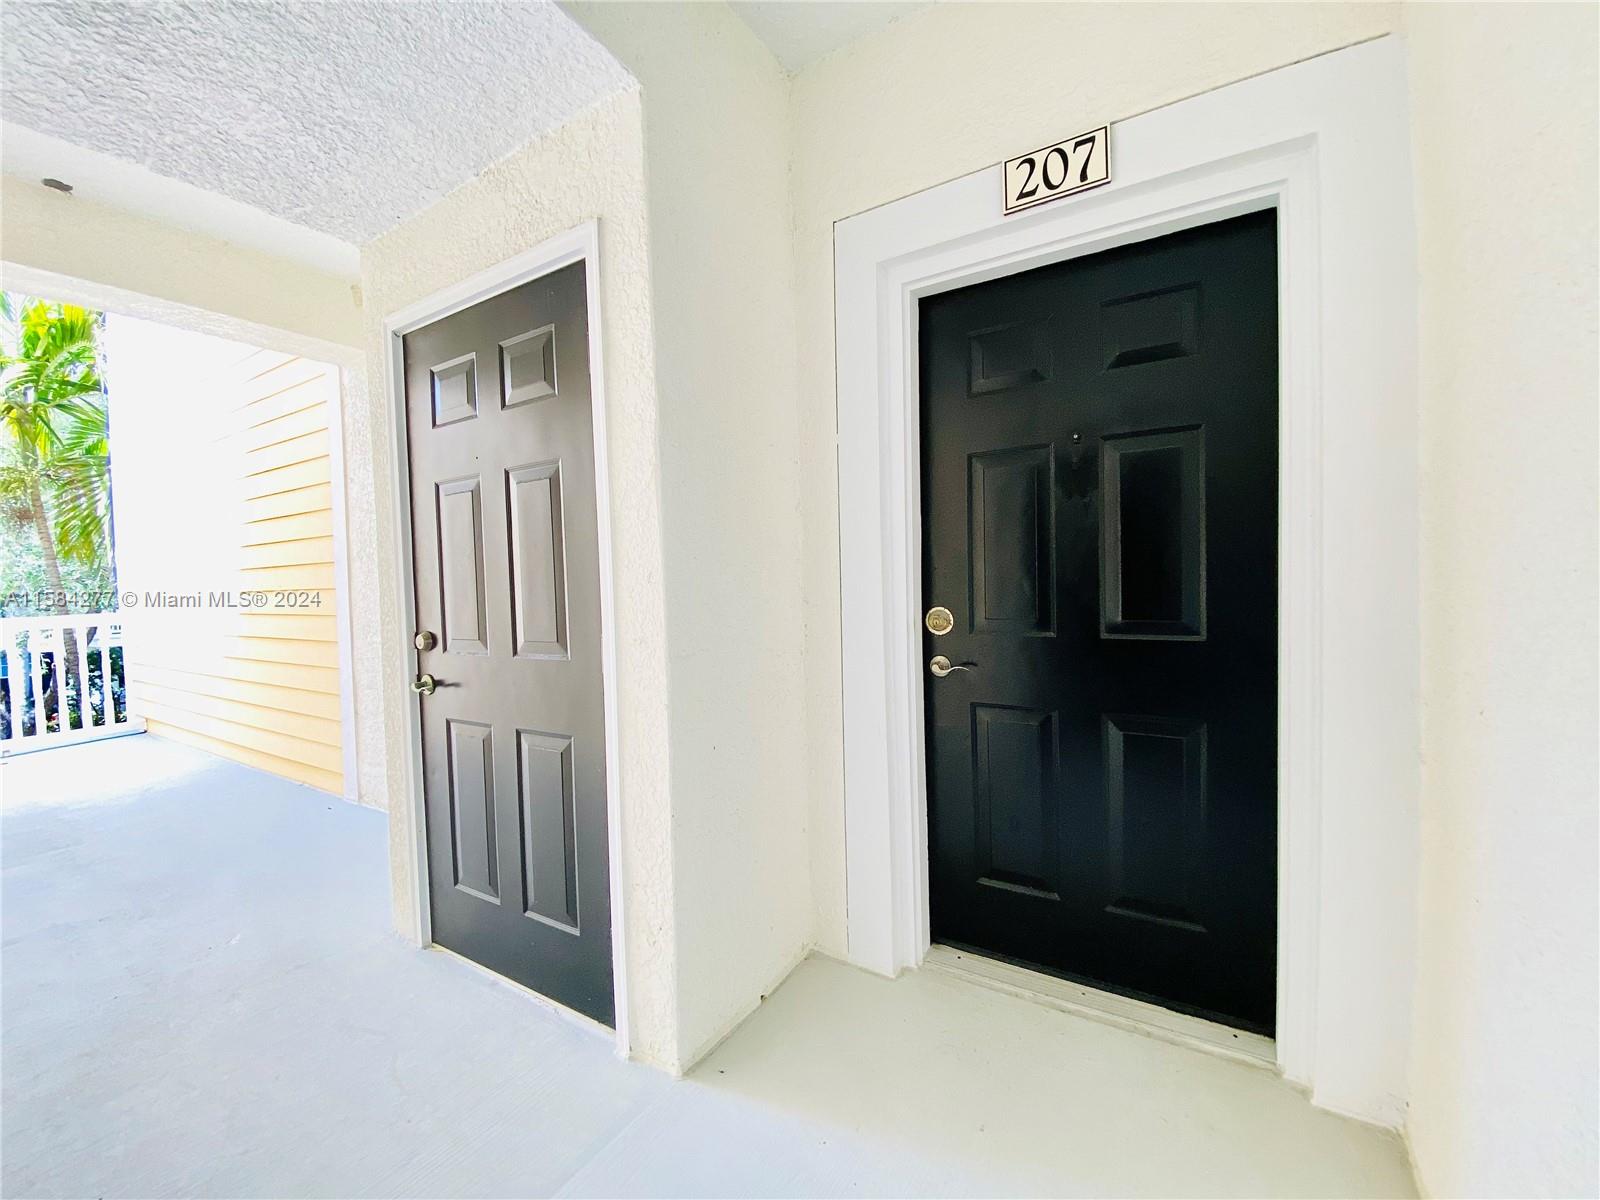 Rental Property at 225 Murcia Dr 207, Jupiter, Palm Beach County, Florida - Bedrooms: 2 
Bathrooms: 2  - $2,600 MO.